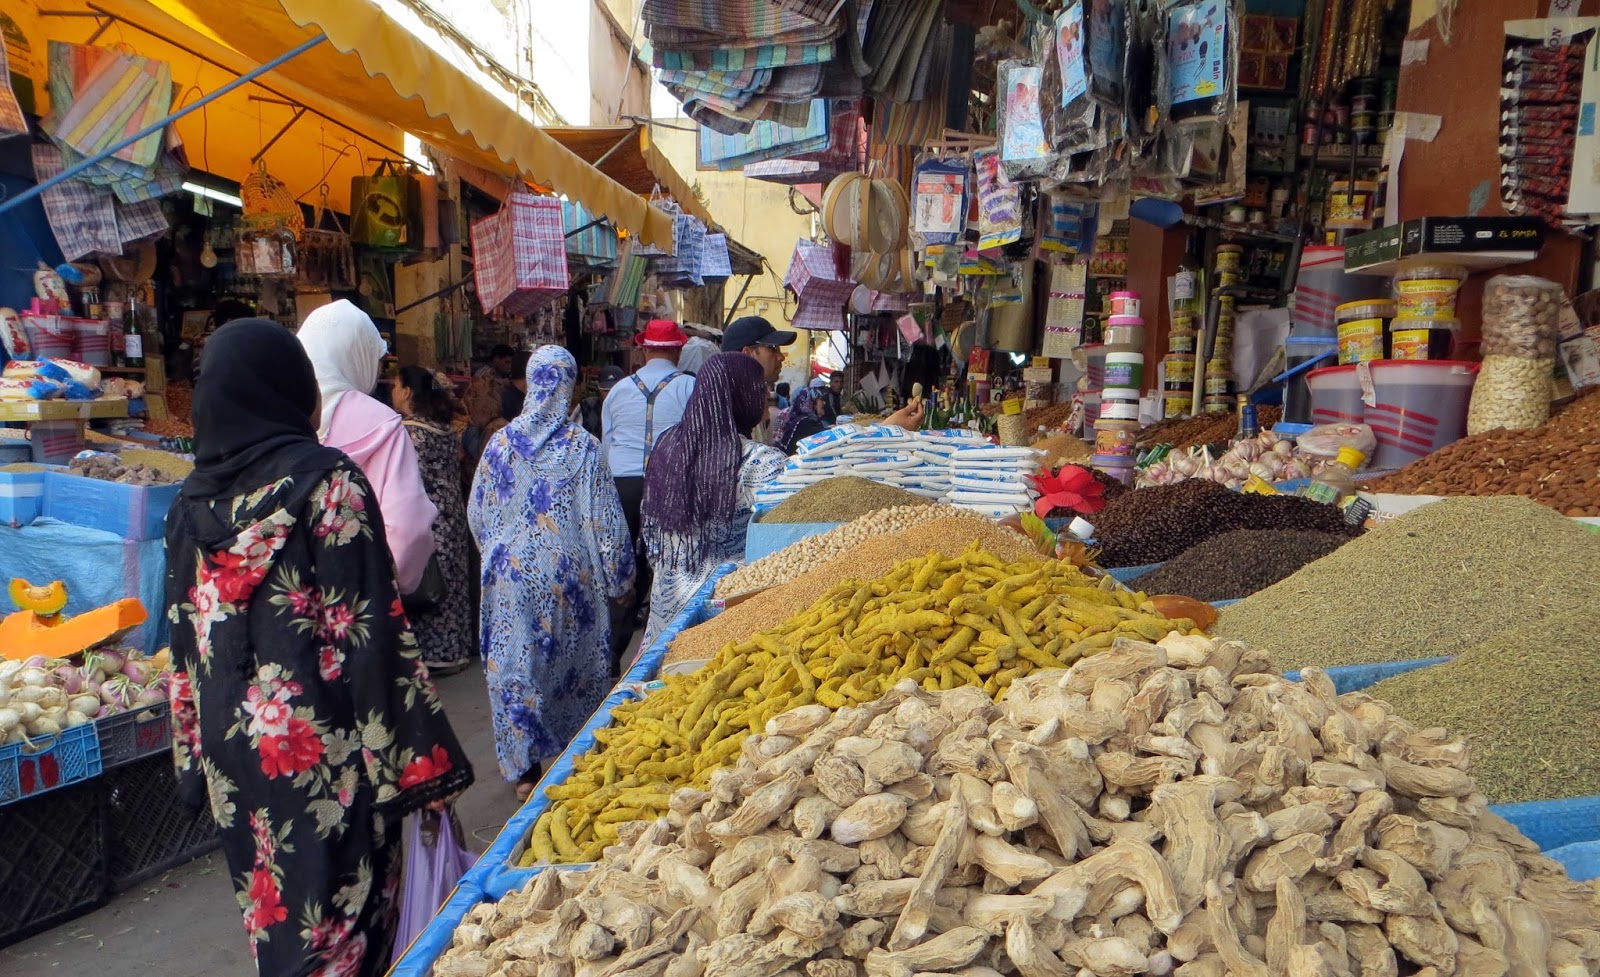 Spice stall in Old Medina souk, Casablanca